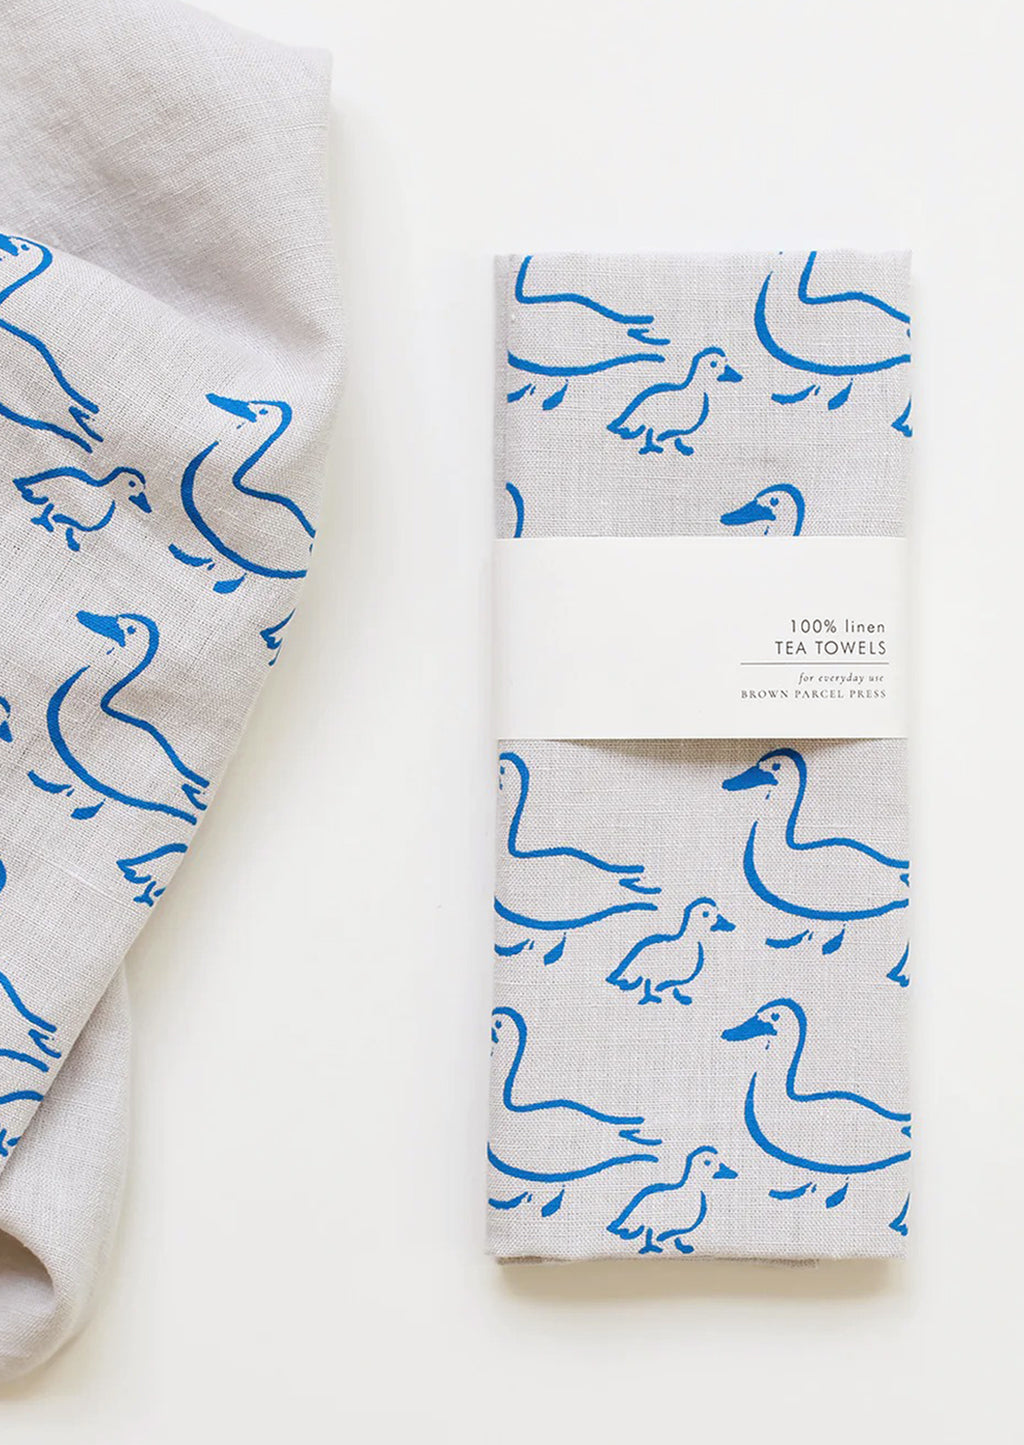 1: A grey linen tea towel with blue duck illustration print.